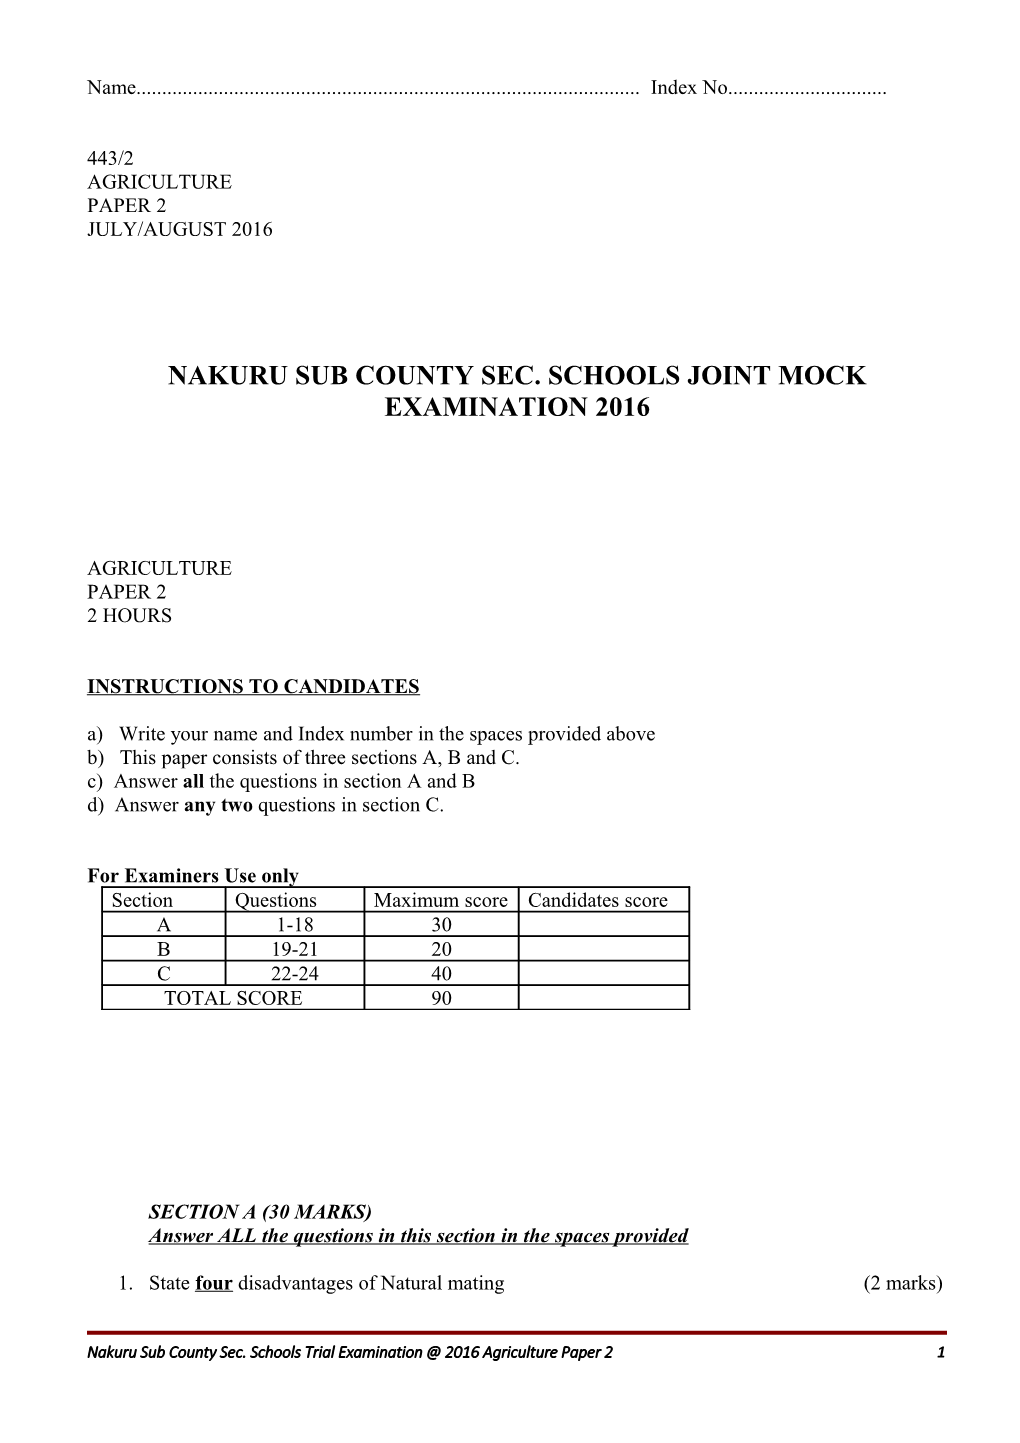 Nakuru Sub County Sec. Schools Joint Mock Examination 2016